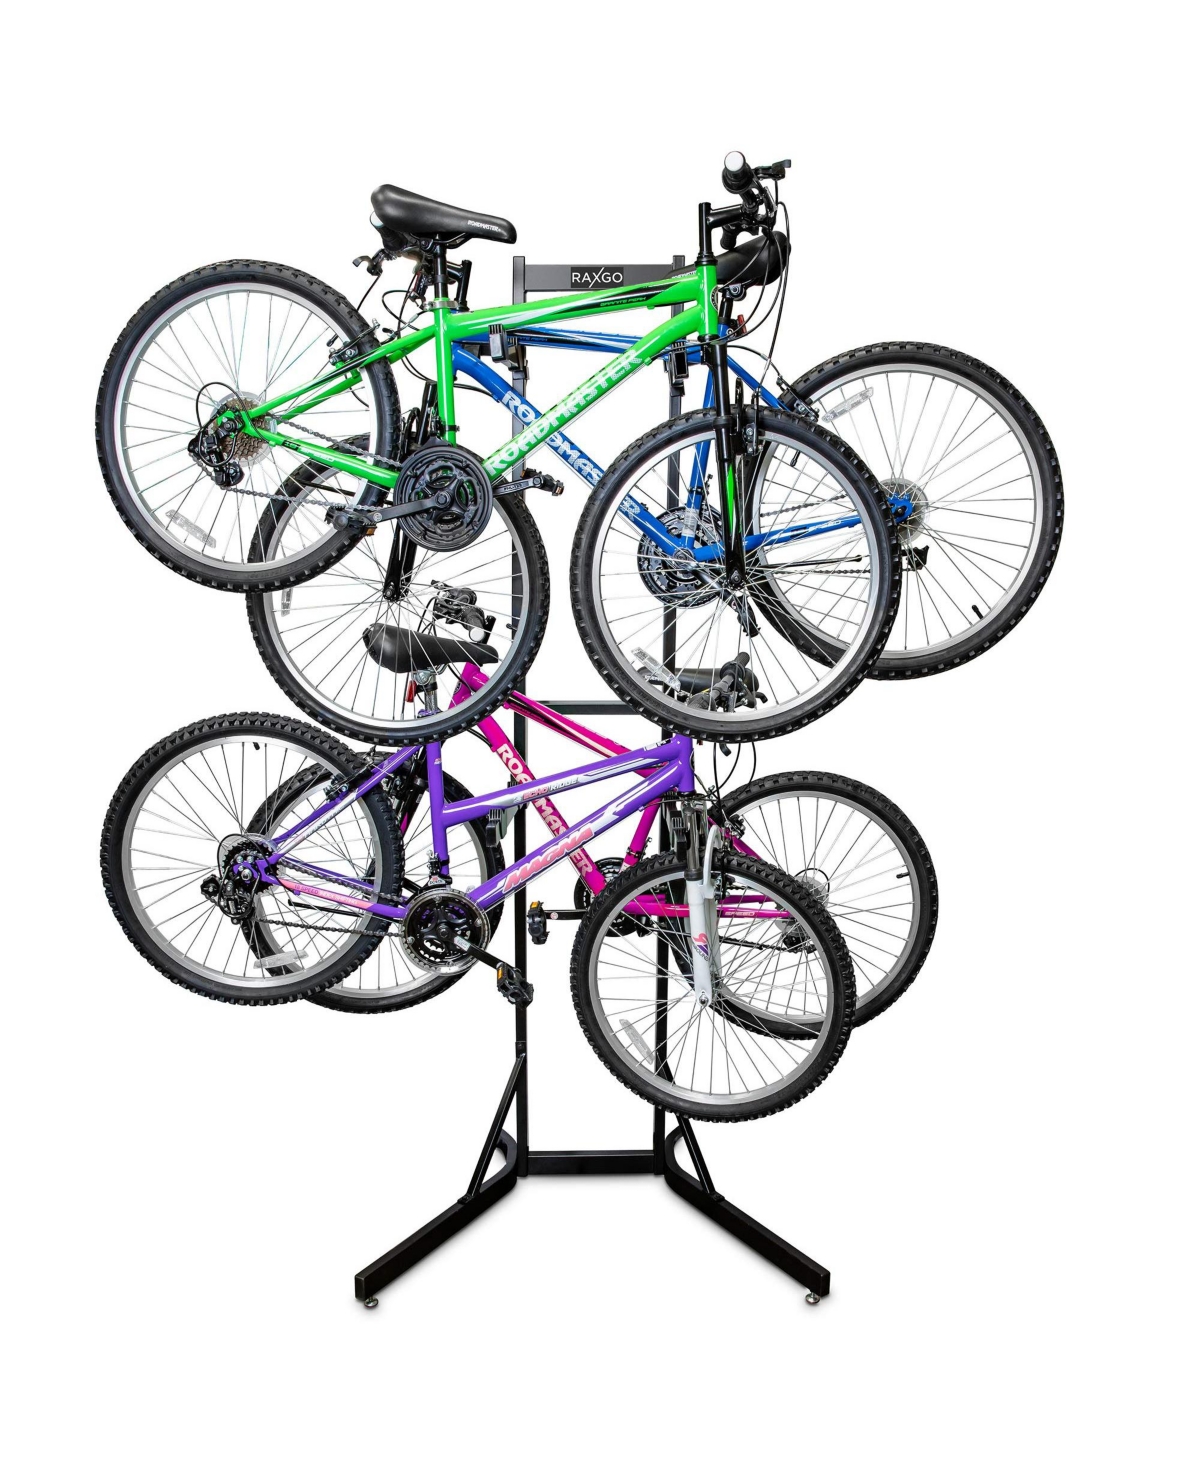 Freestanding Garage Bike Rack, 4 Bike Rack with Hooks - Black